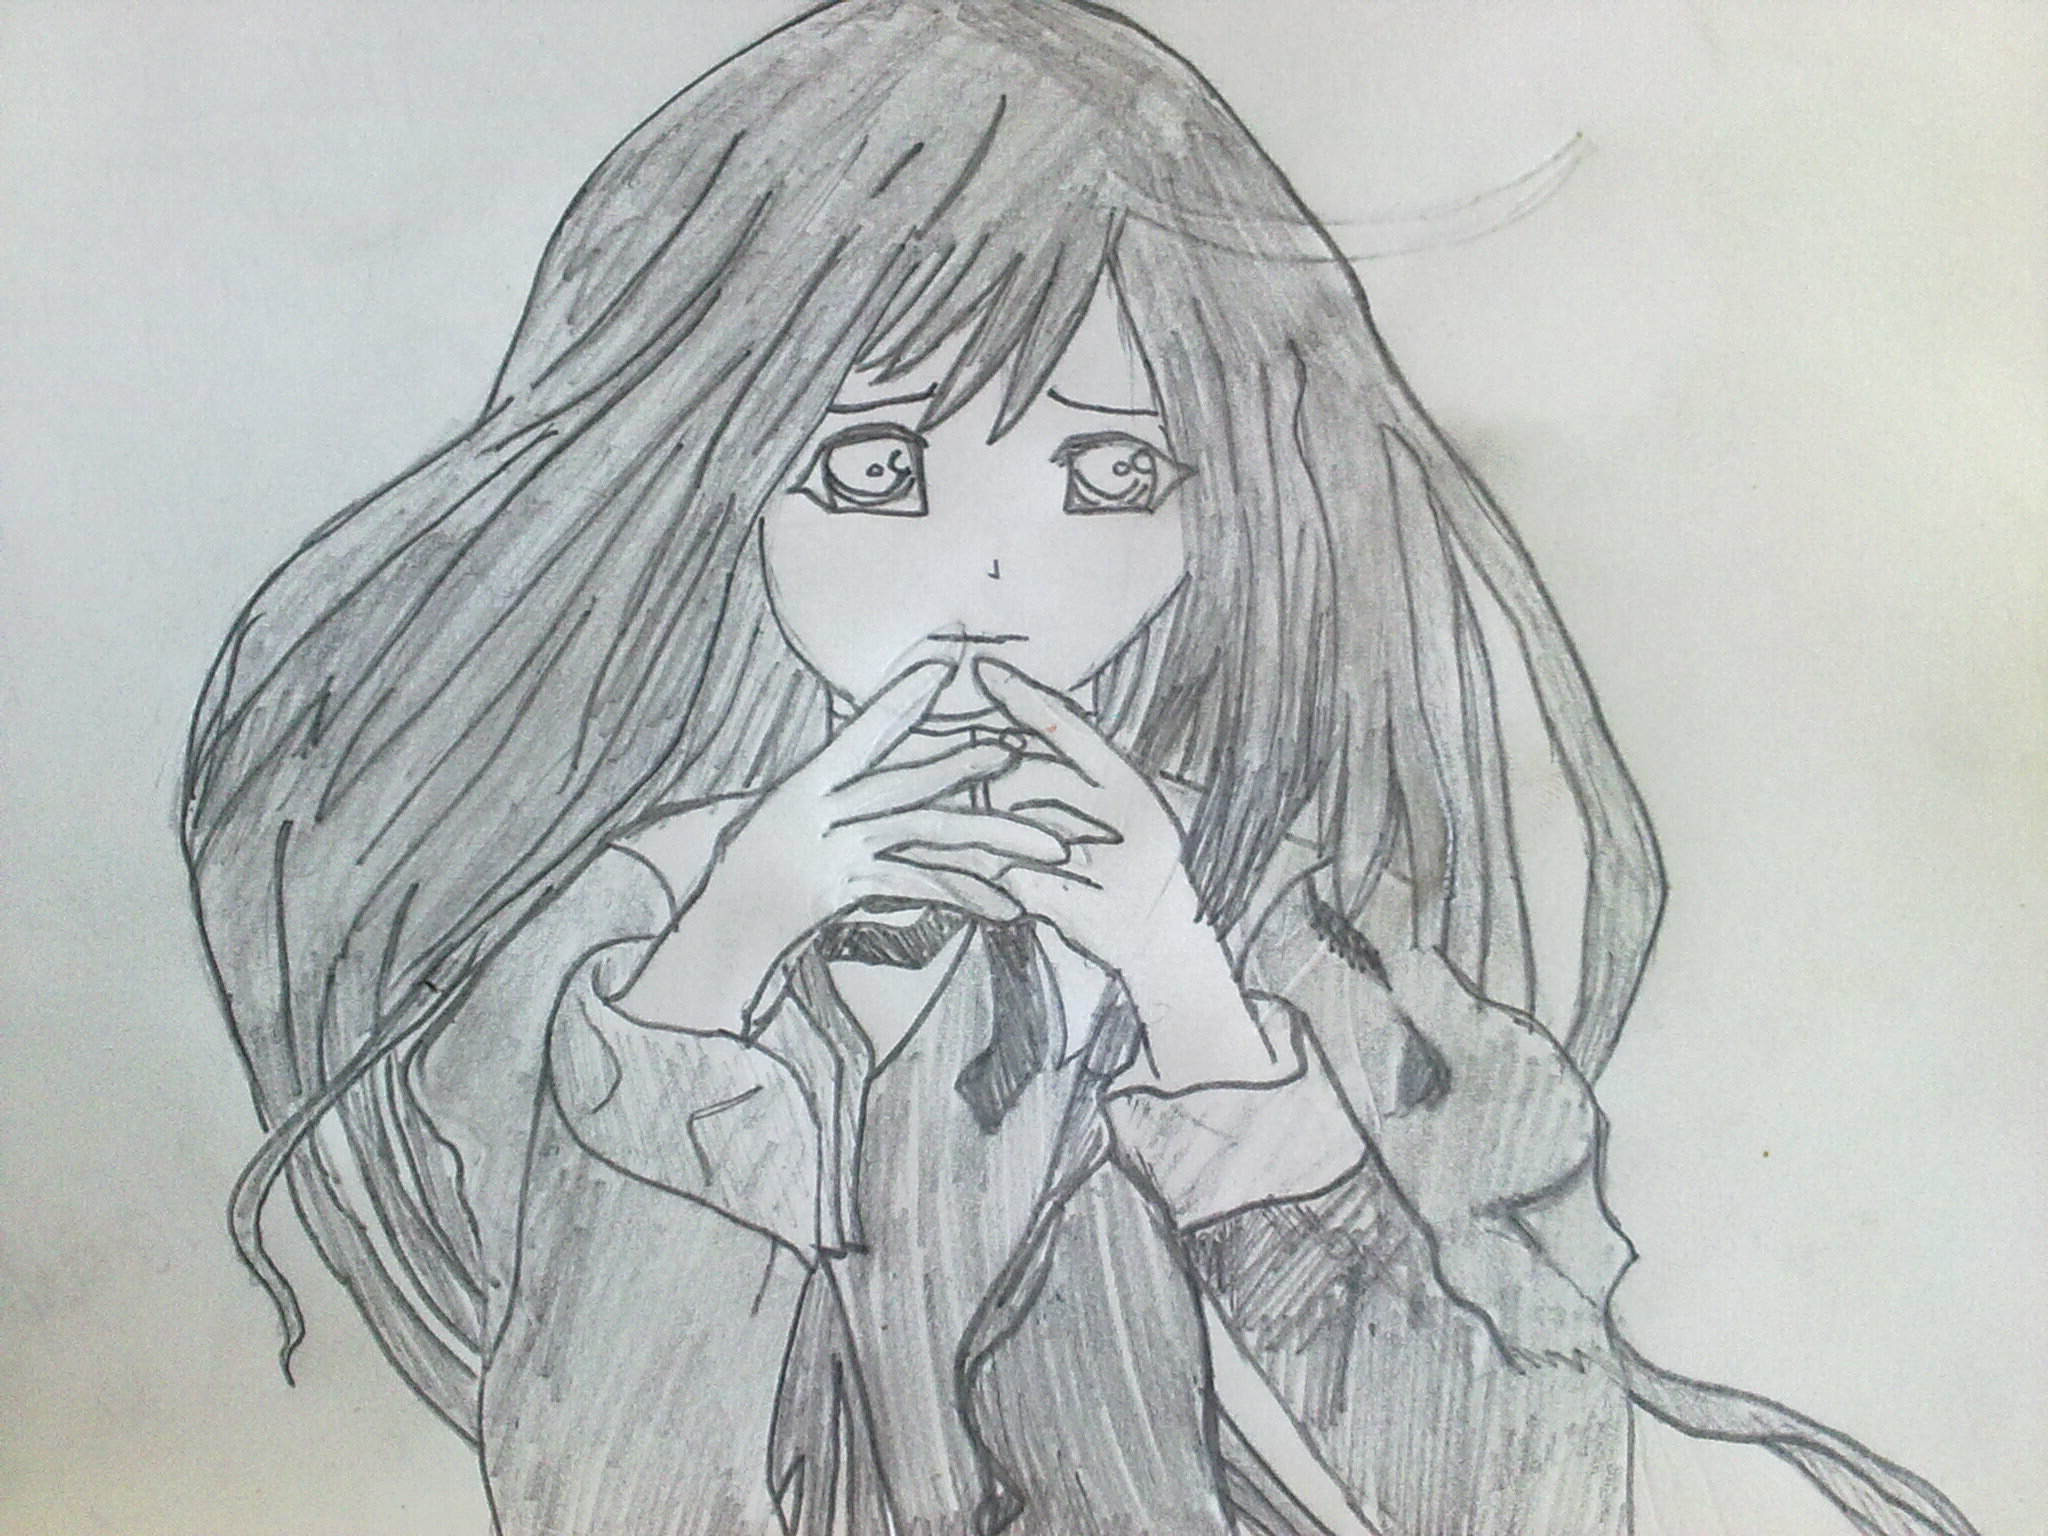 Sad Anime GirlDrawing by ladyshizukasama on DeviantArt